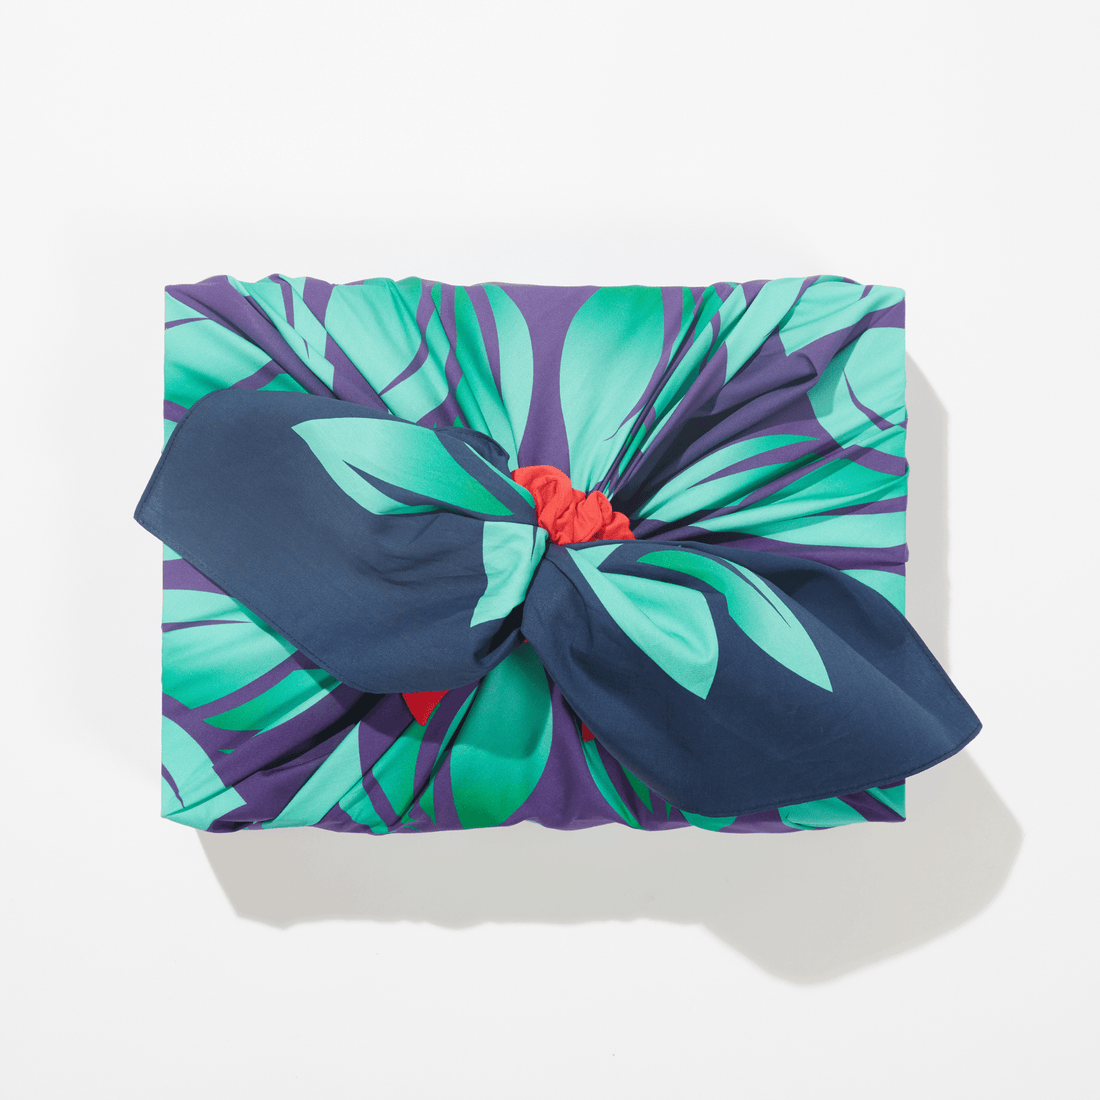 Gentle Heart | 35" Furoshiki Gift Wrap by Rawbie Thring - Wrappr